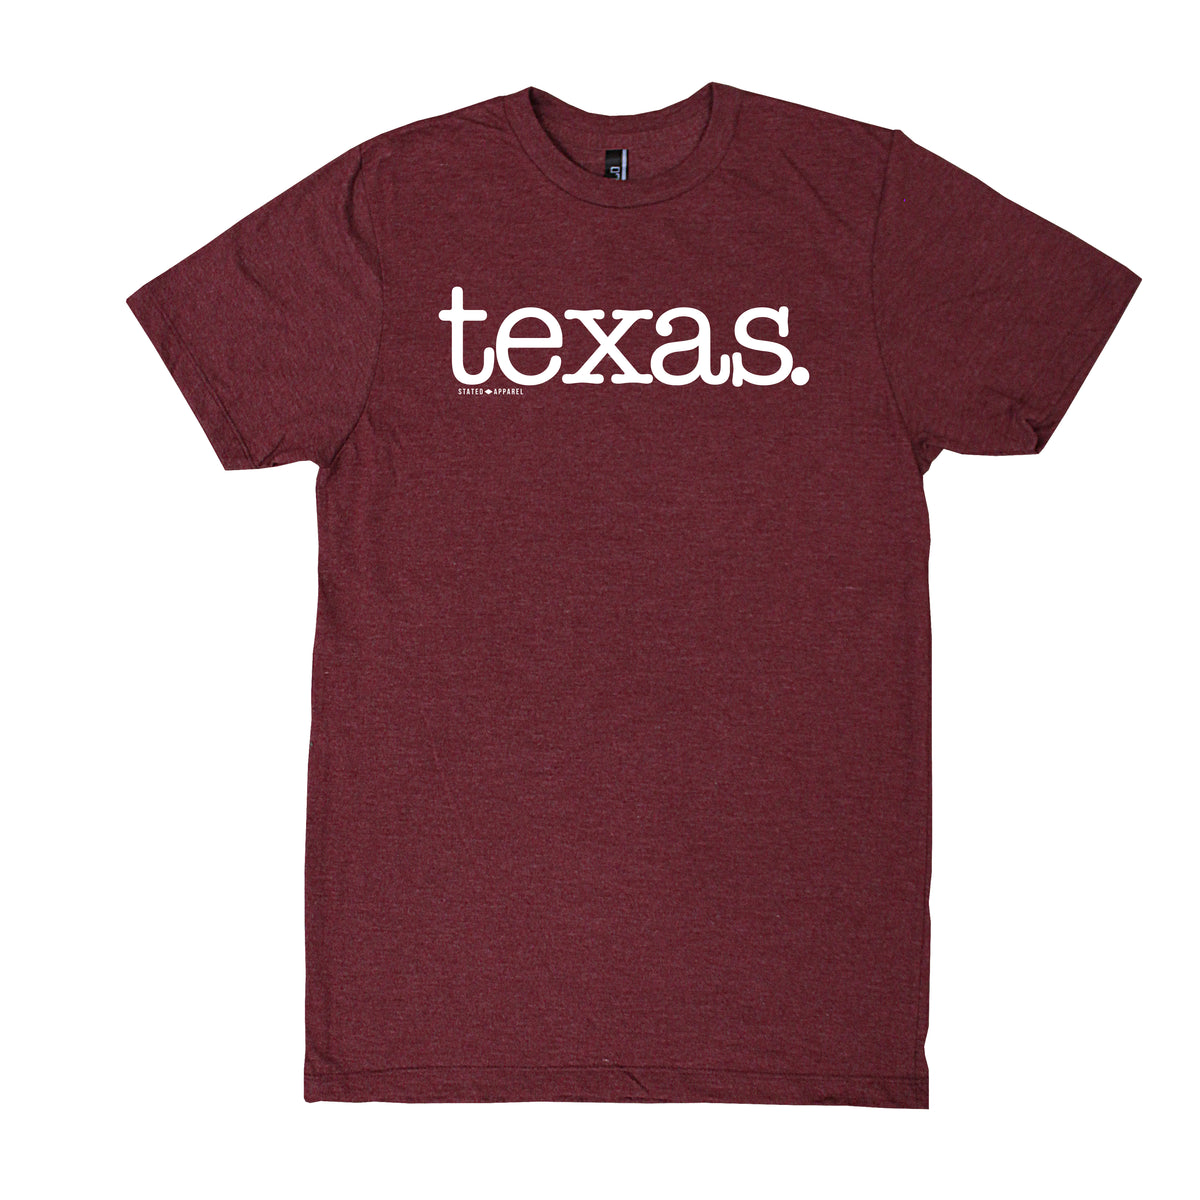 Texas. T-Shirt